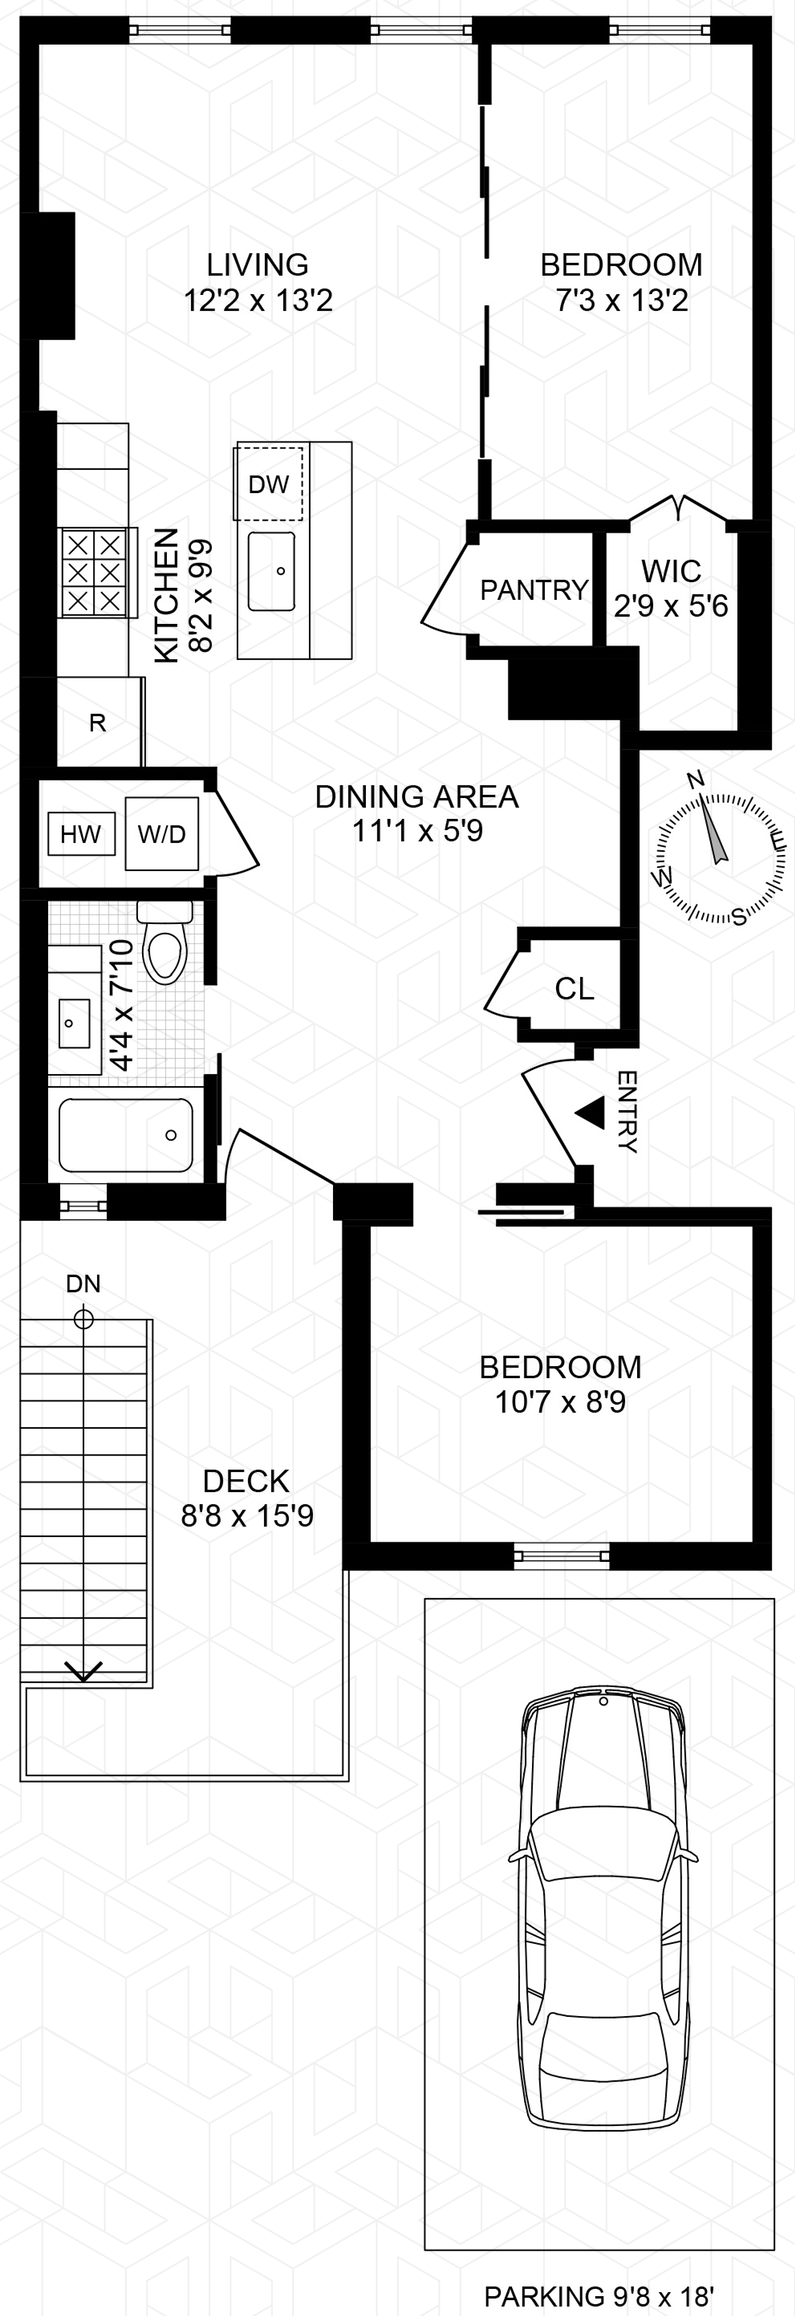 Floorplan for 291 4th St, 3